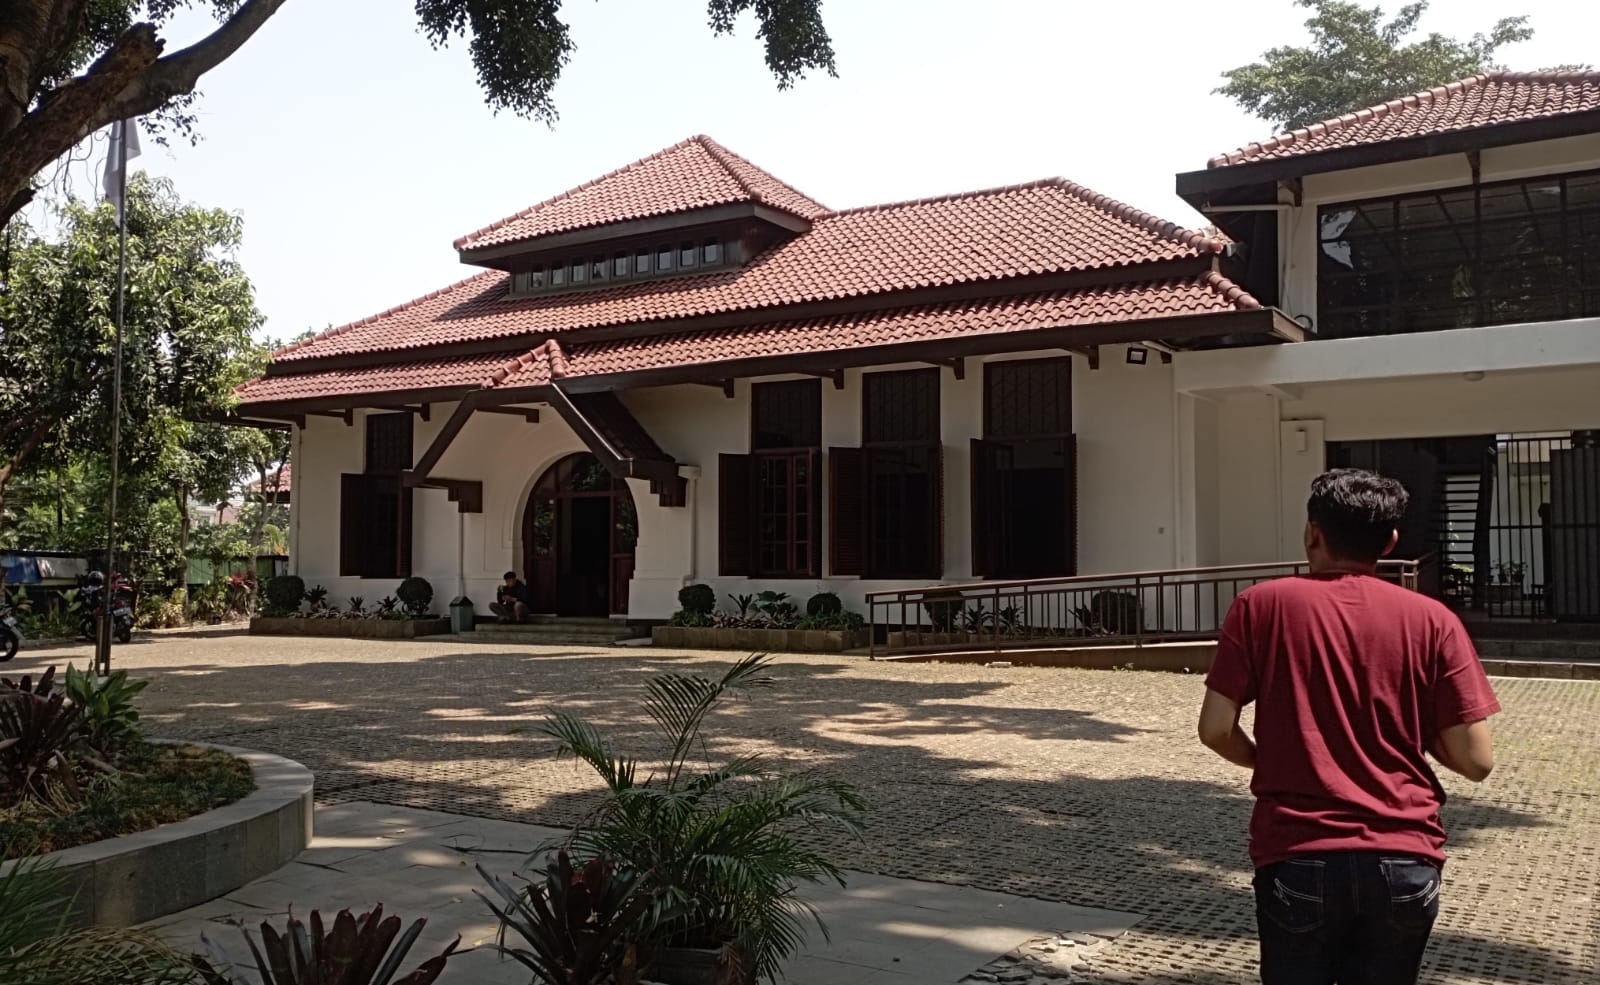 Ist. Gedung Indonesia Menggugat (GIM) yang berlokasi di Jl. Perintis Kemerdekaa, Kota Bandung. Foto. Sandi Nugraha